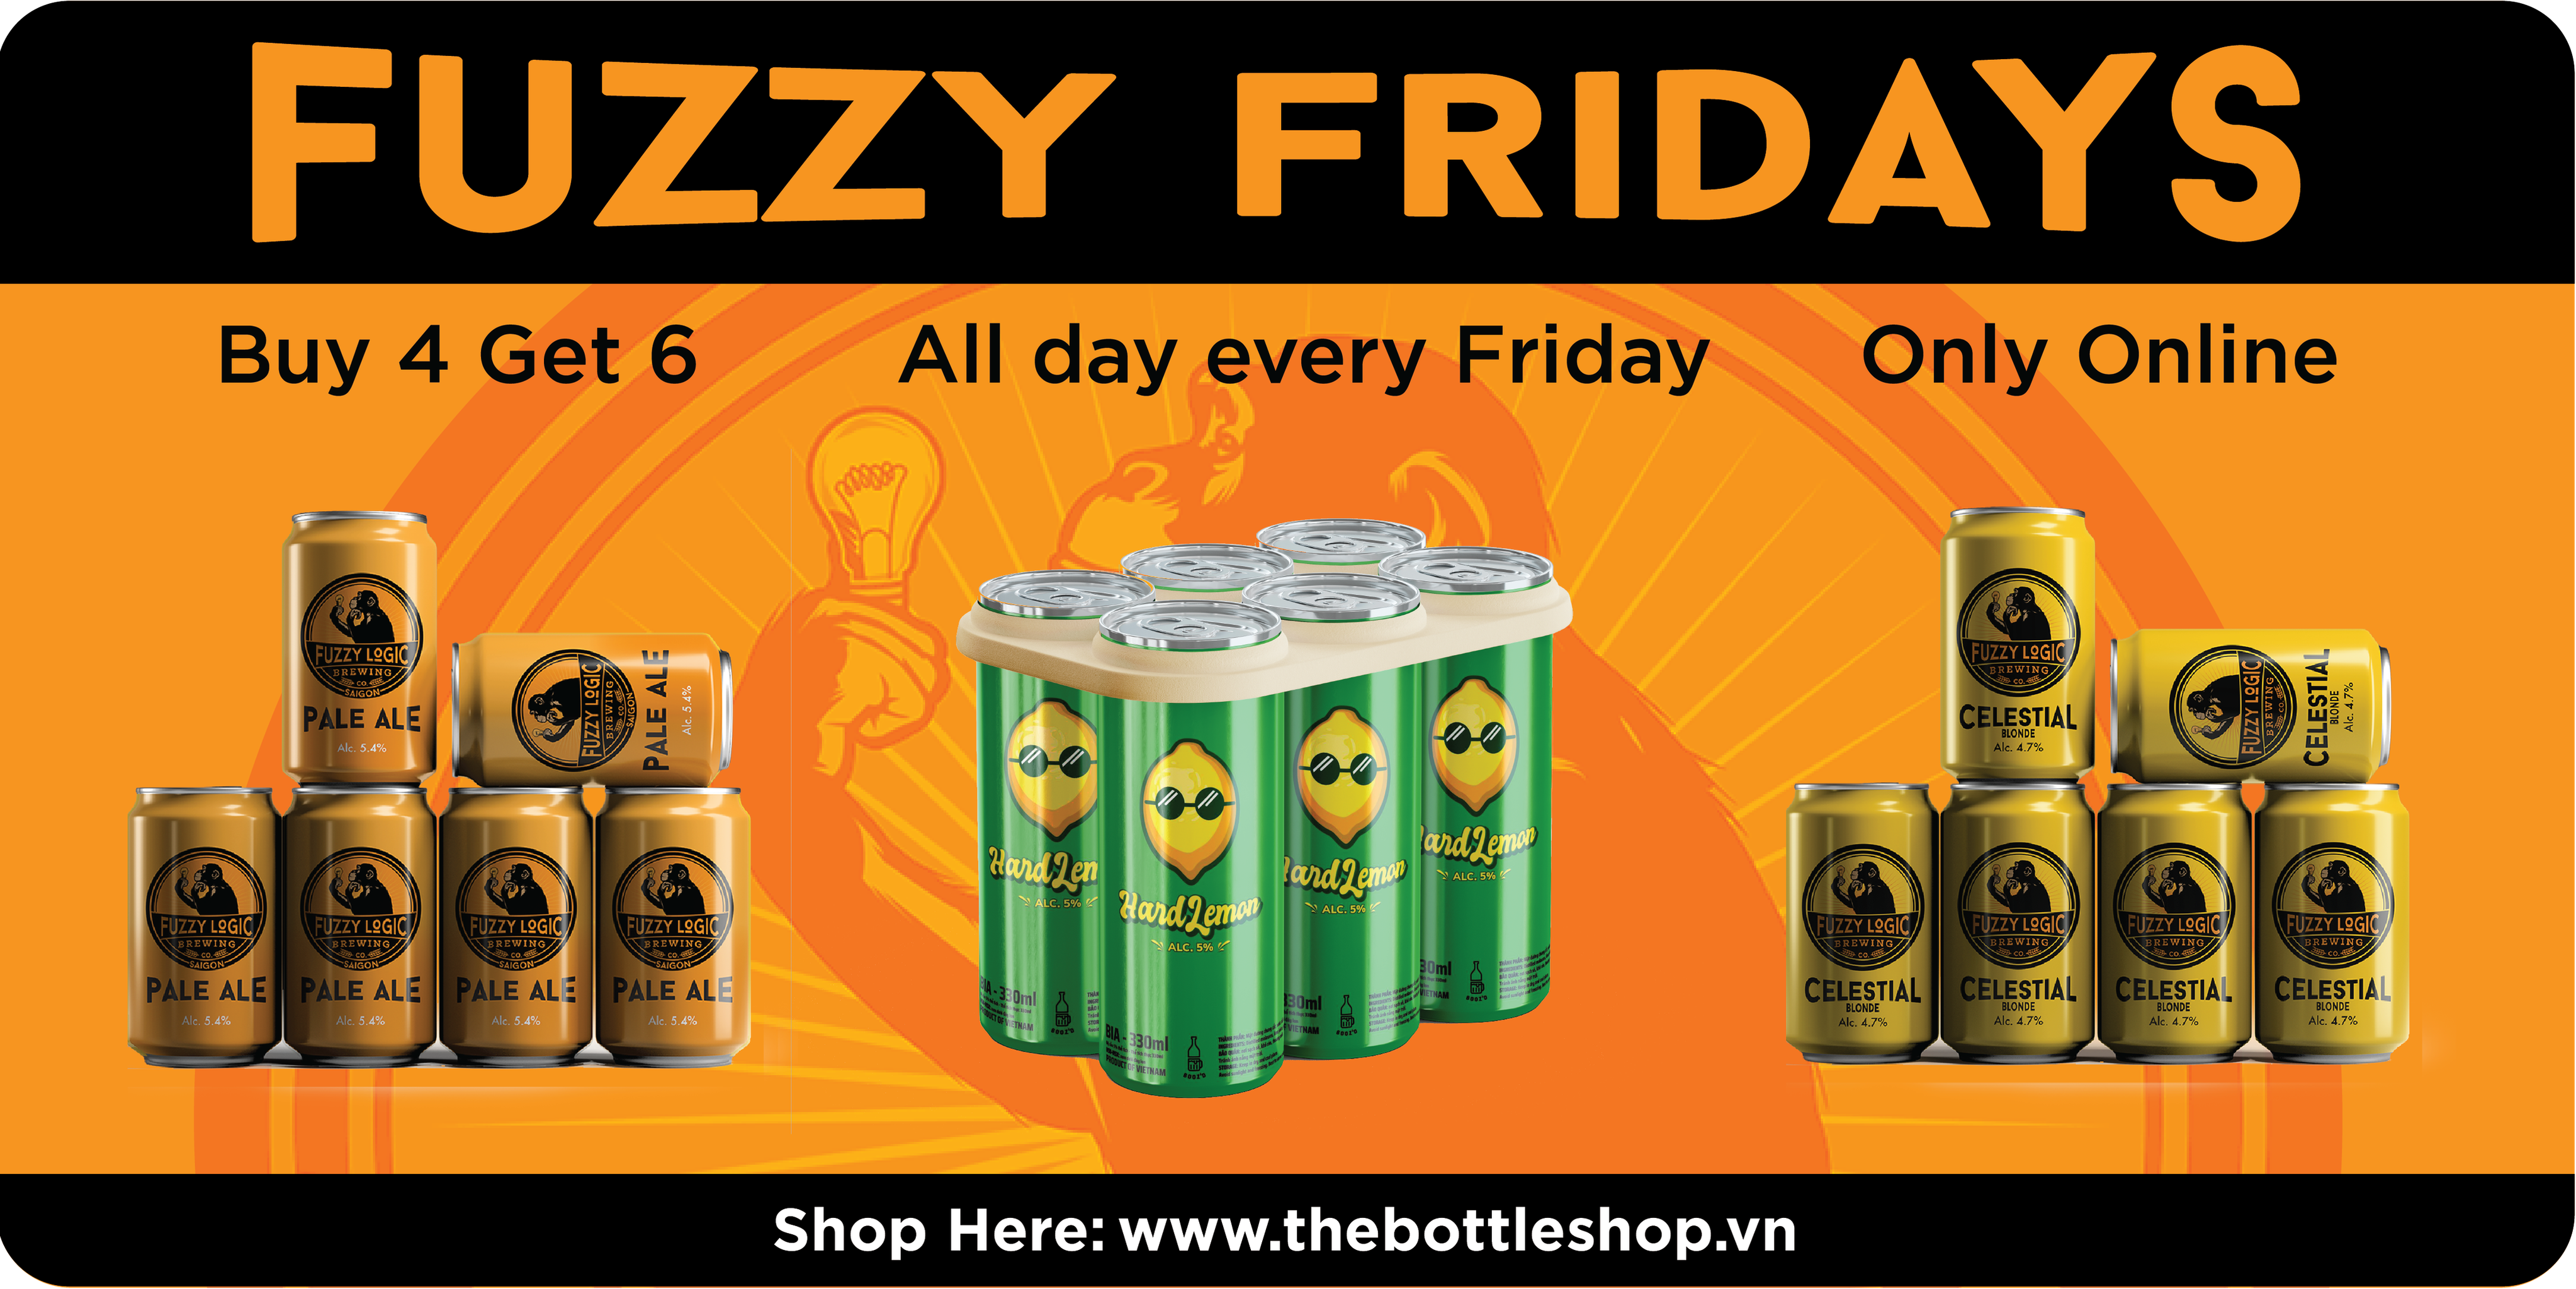 Fuzzy Fridays Promo